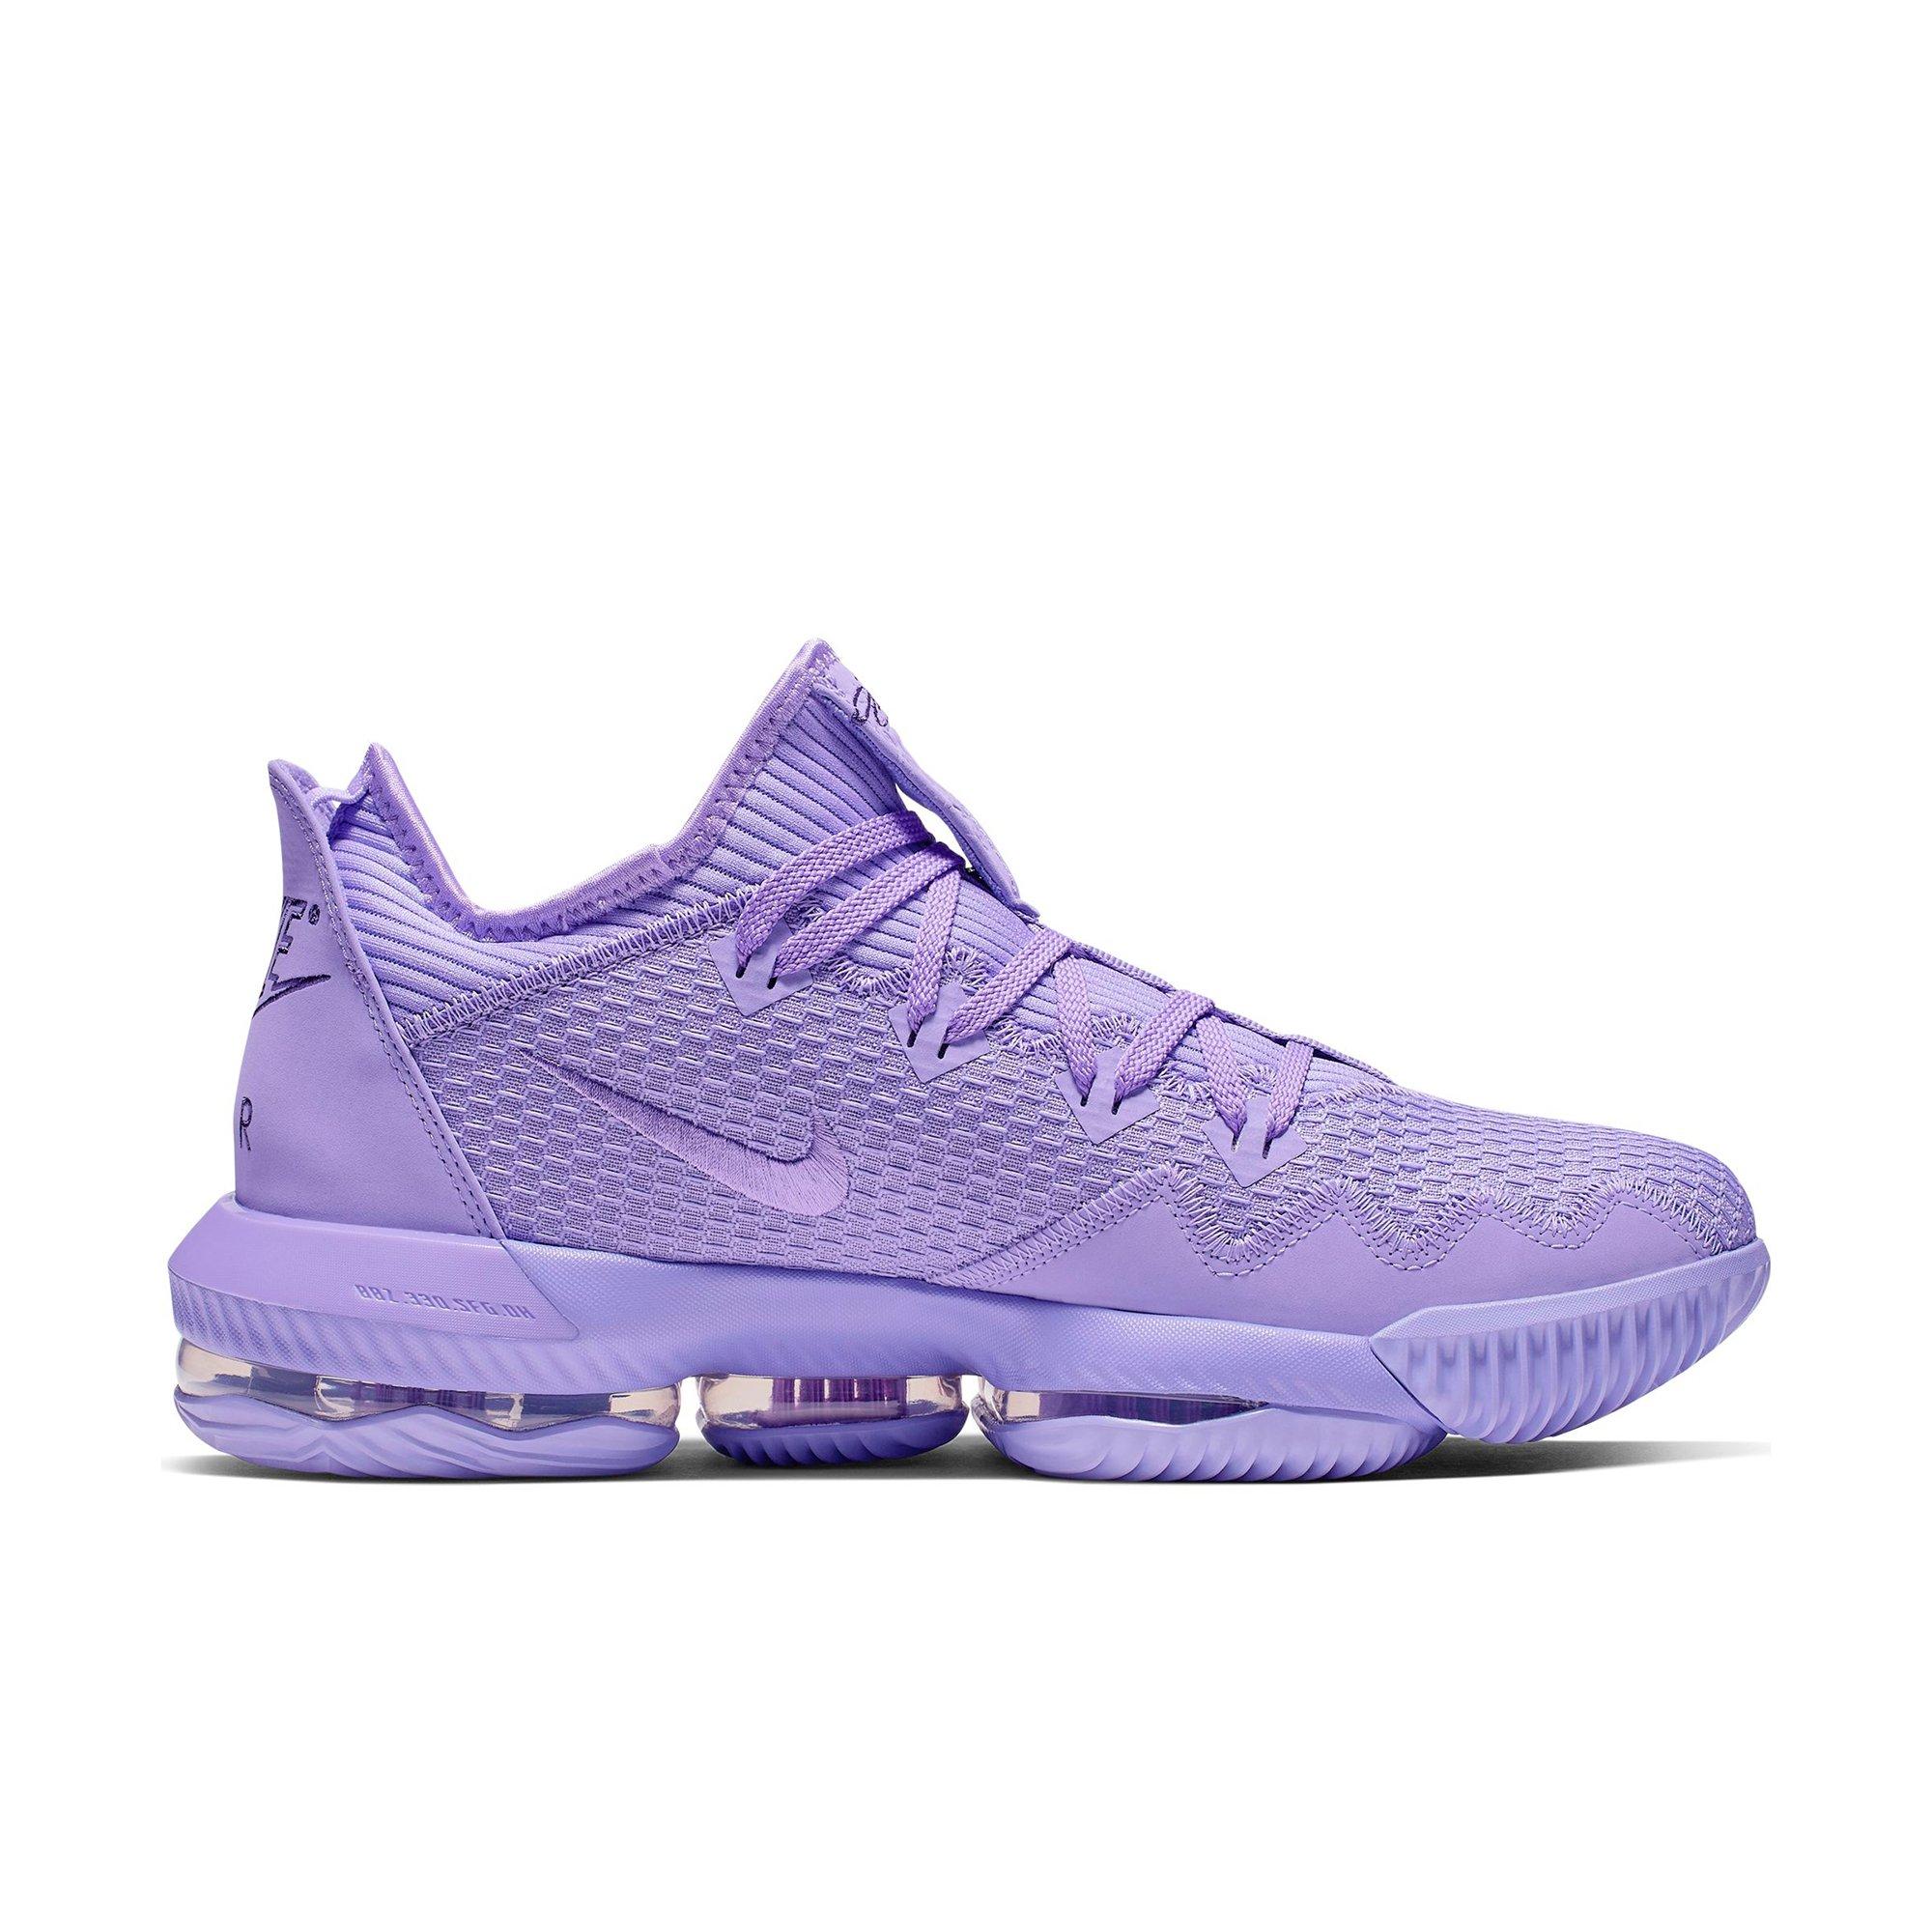 lebron james purple sneakers